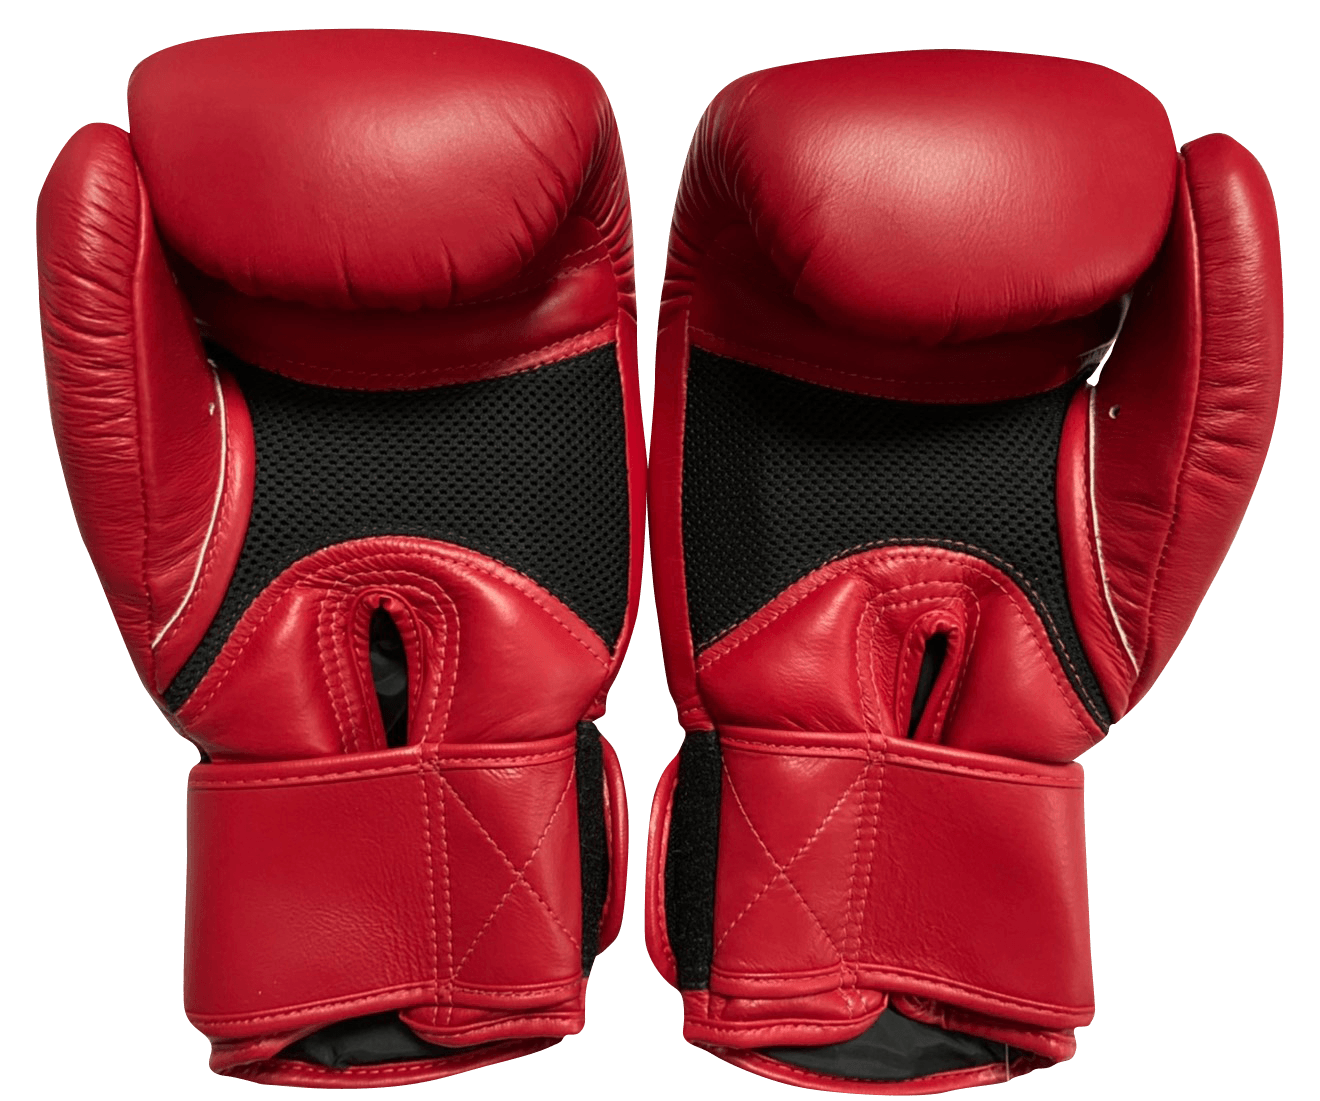 Top King Boxing Gloves TKBGAV Air Red - SUPER EXPORT SHOP